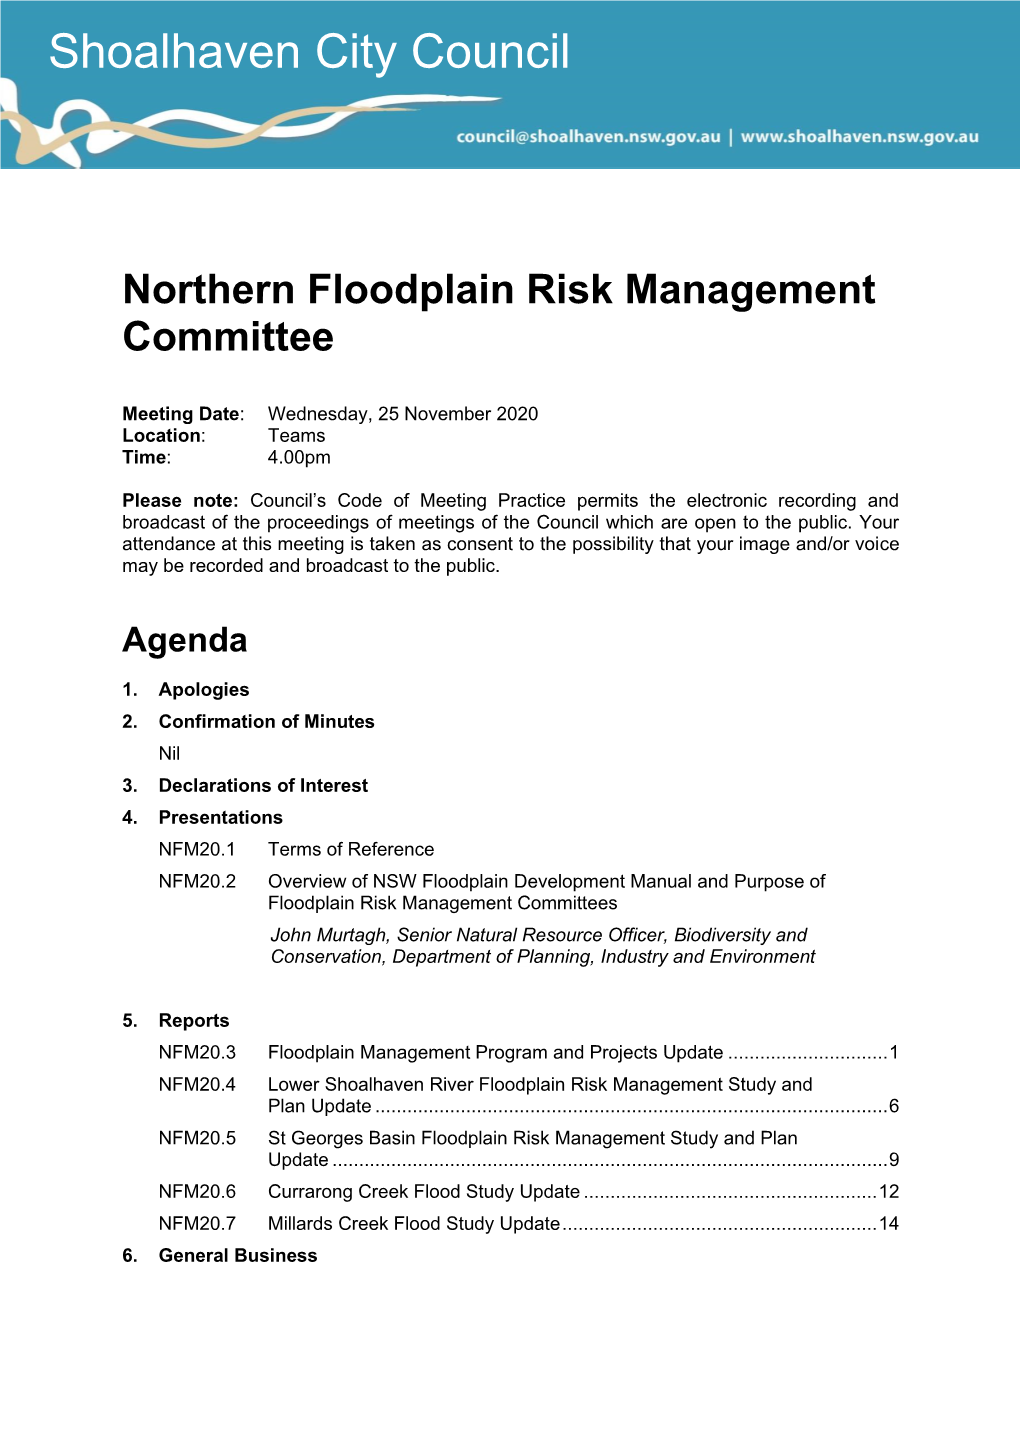 Agenda of Northern Floodplain Risk Management Committee